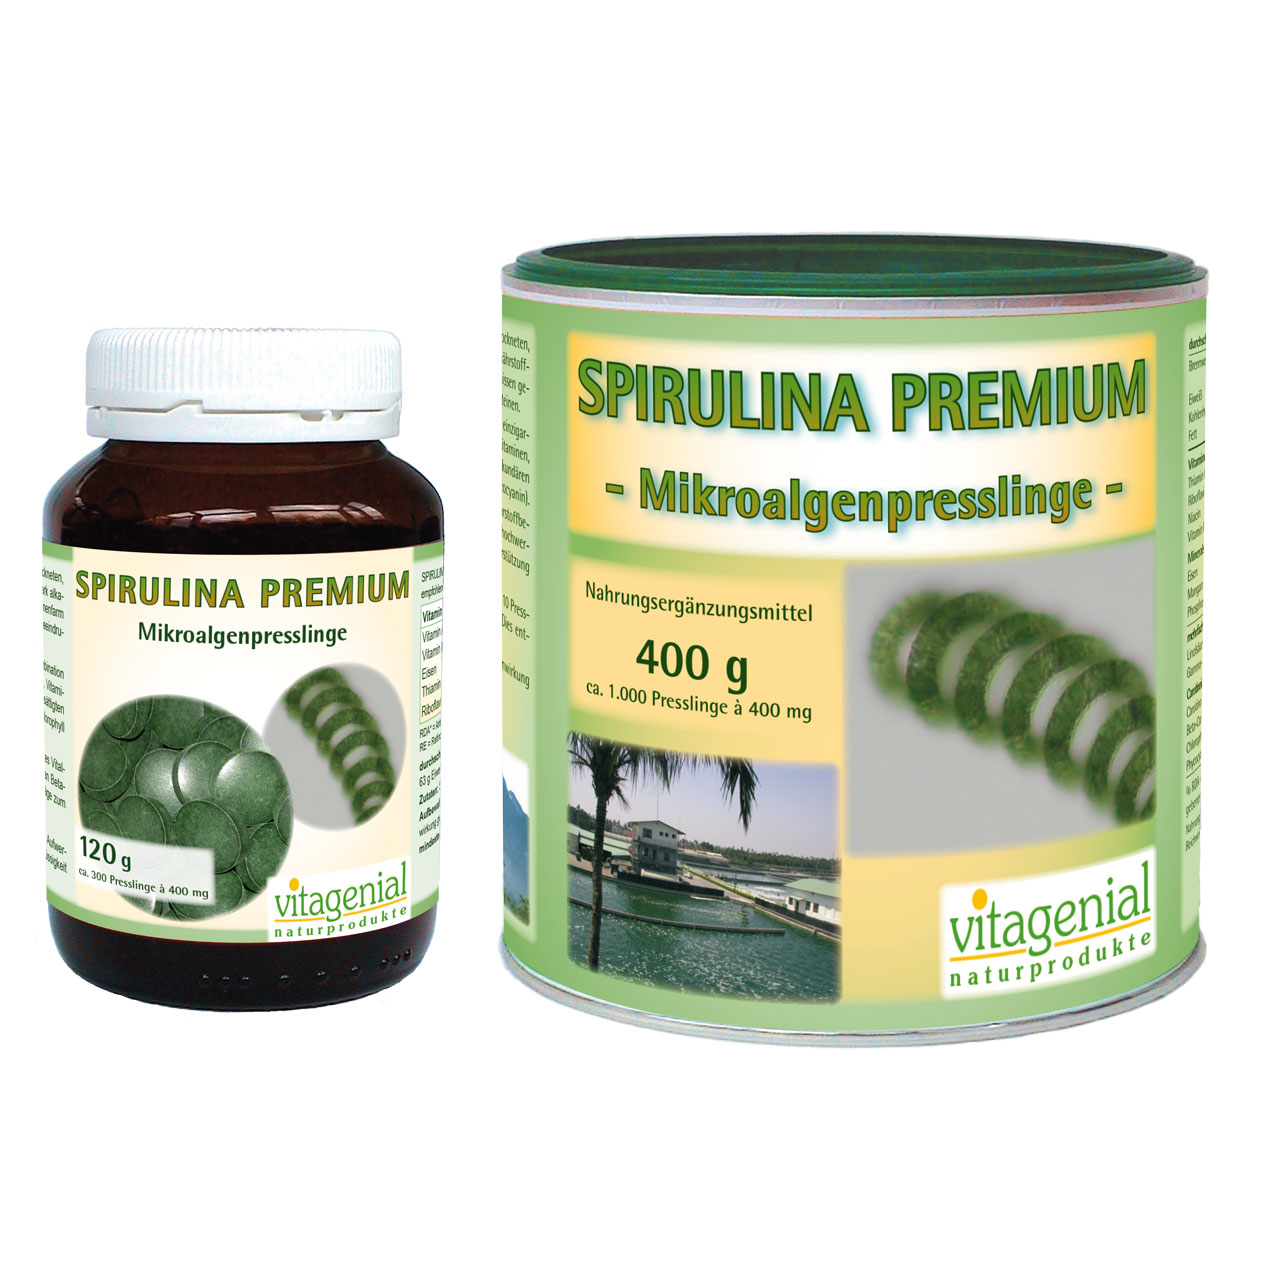 Vitagenial Spirulina Premium Mikroalgenpresslinge Vorschau